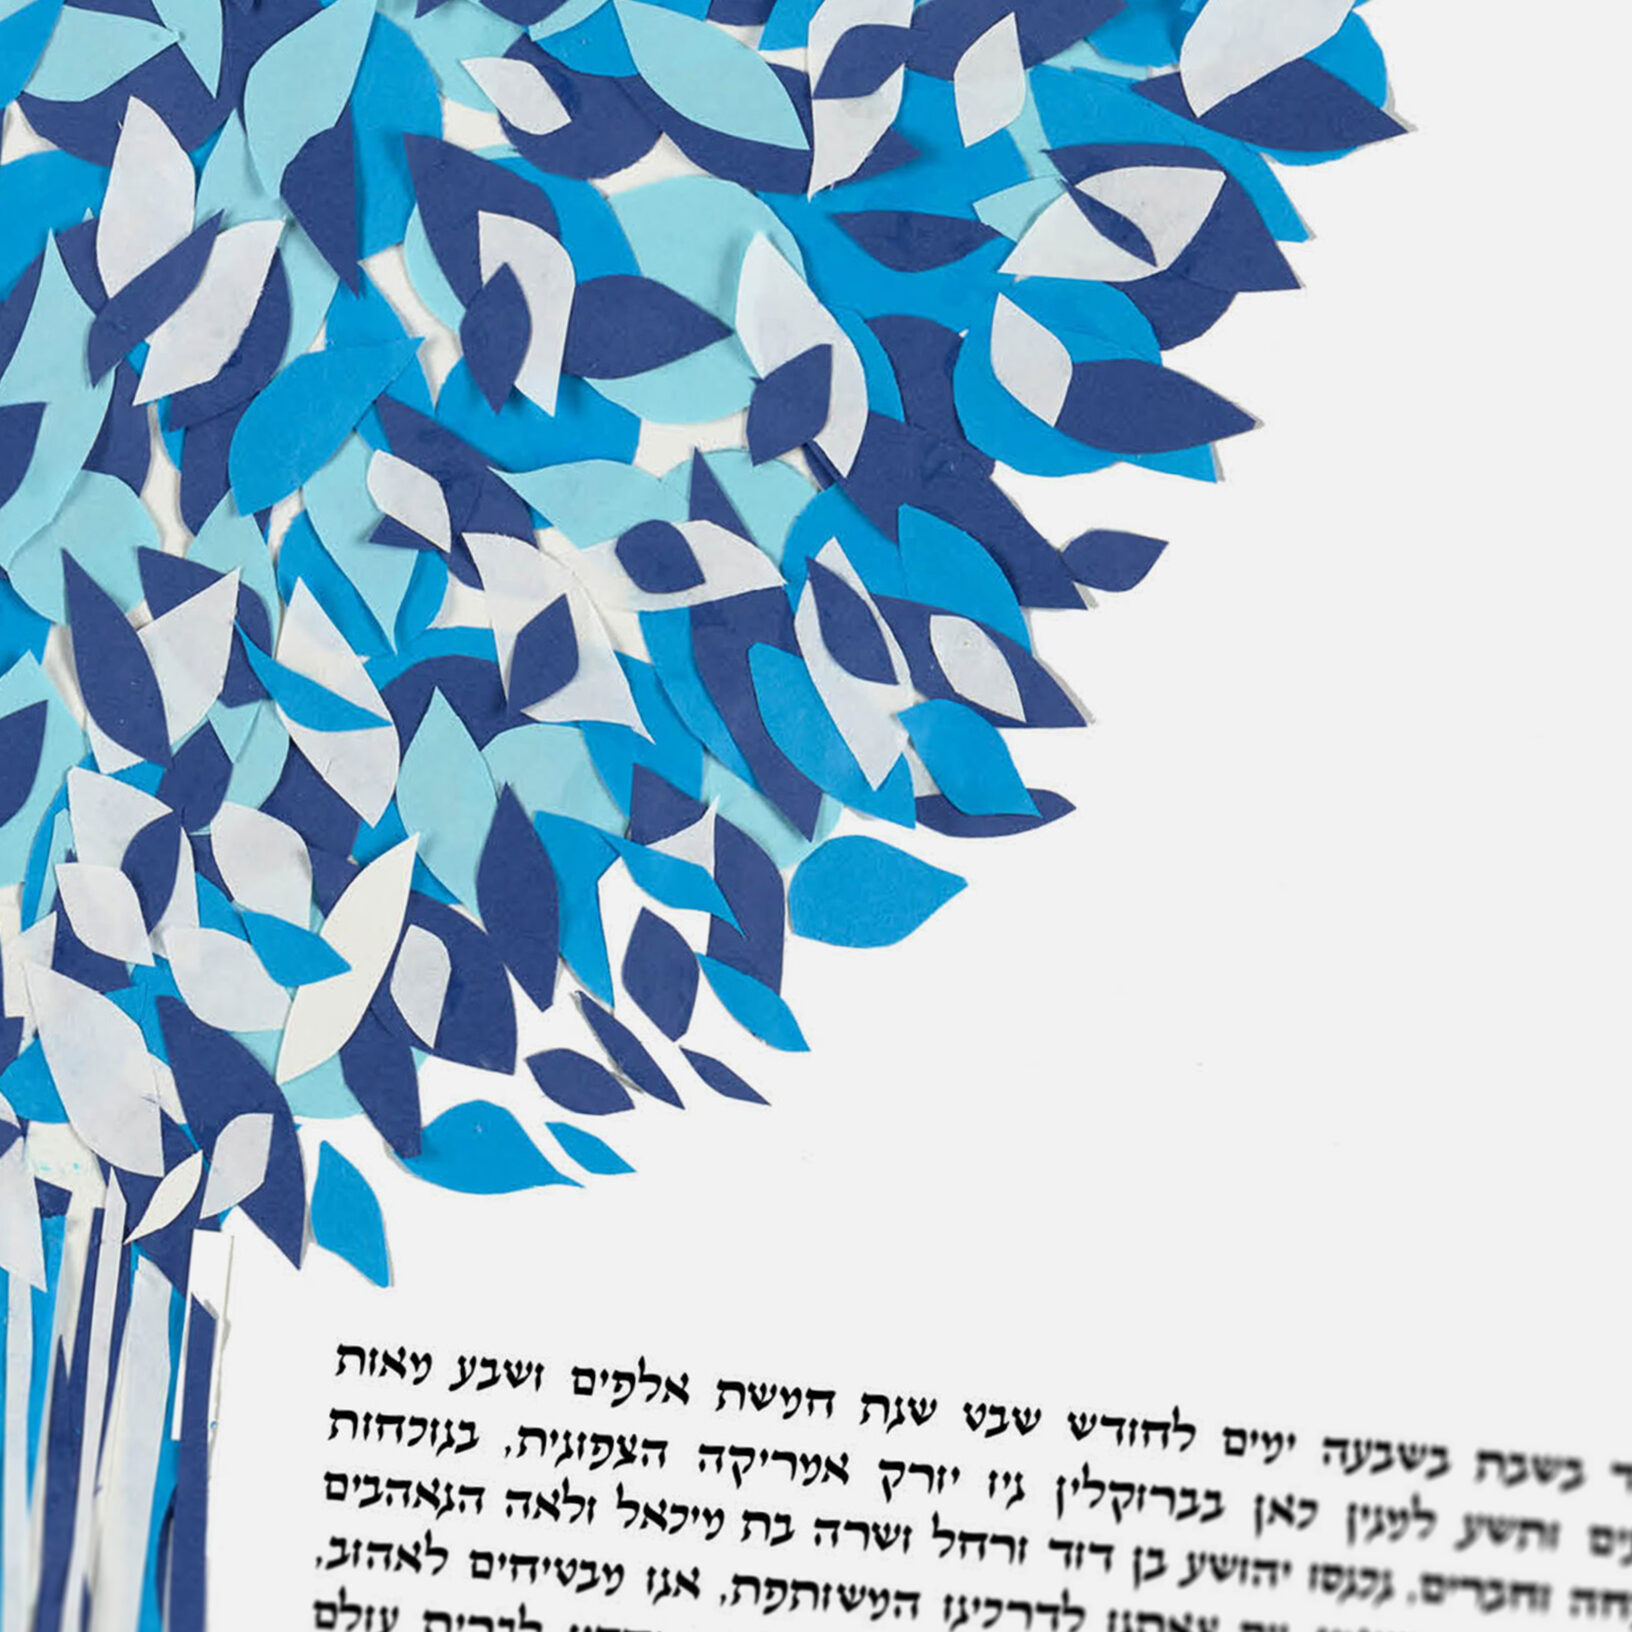 Angela Munitz Giclee Tree of Life - We Plant Our Tree Blue Ketubah Jewish Wedding Contract